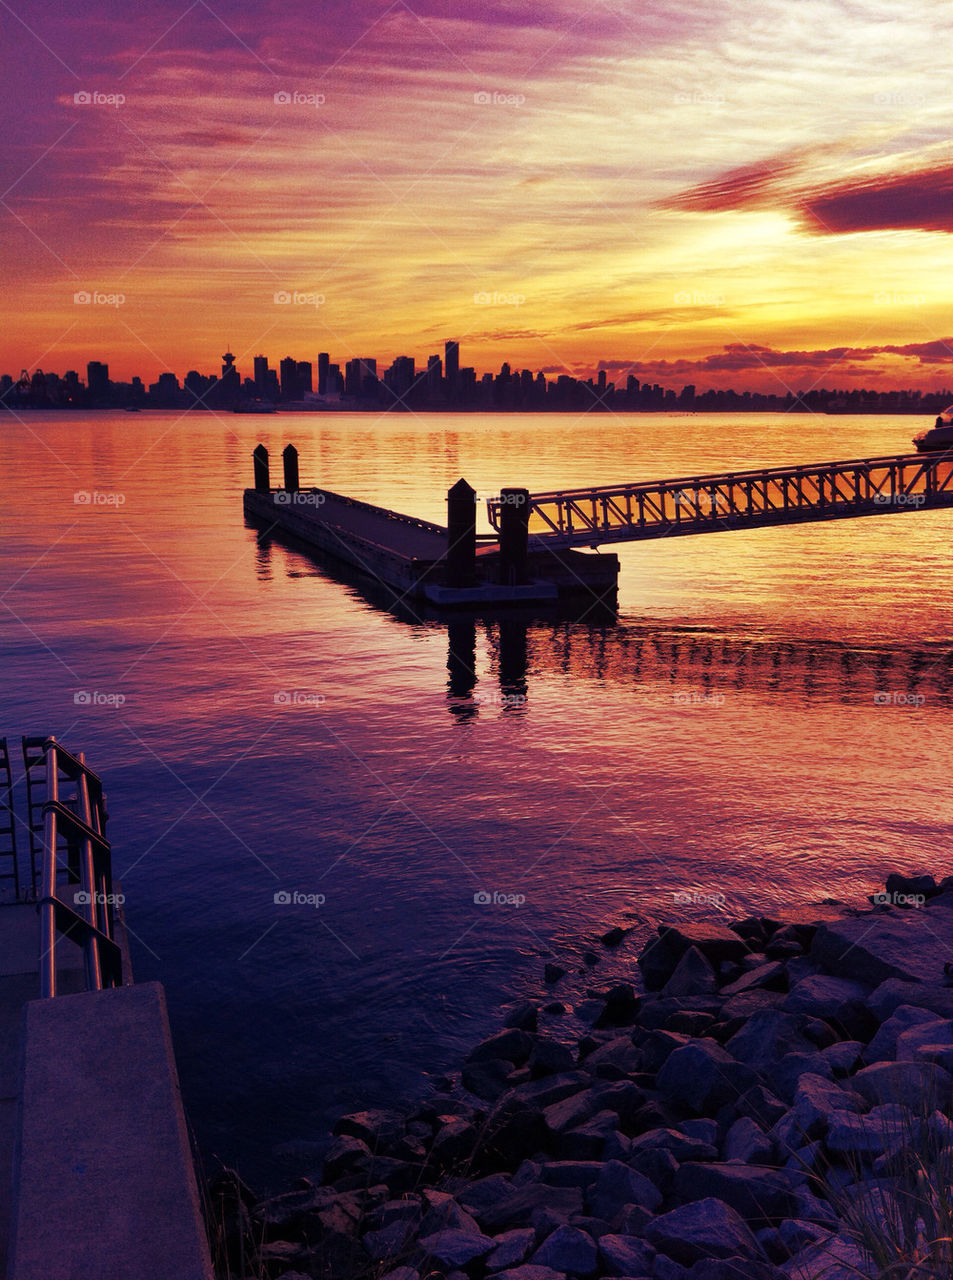 ocean sunset skyline dock by kzr